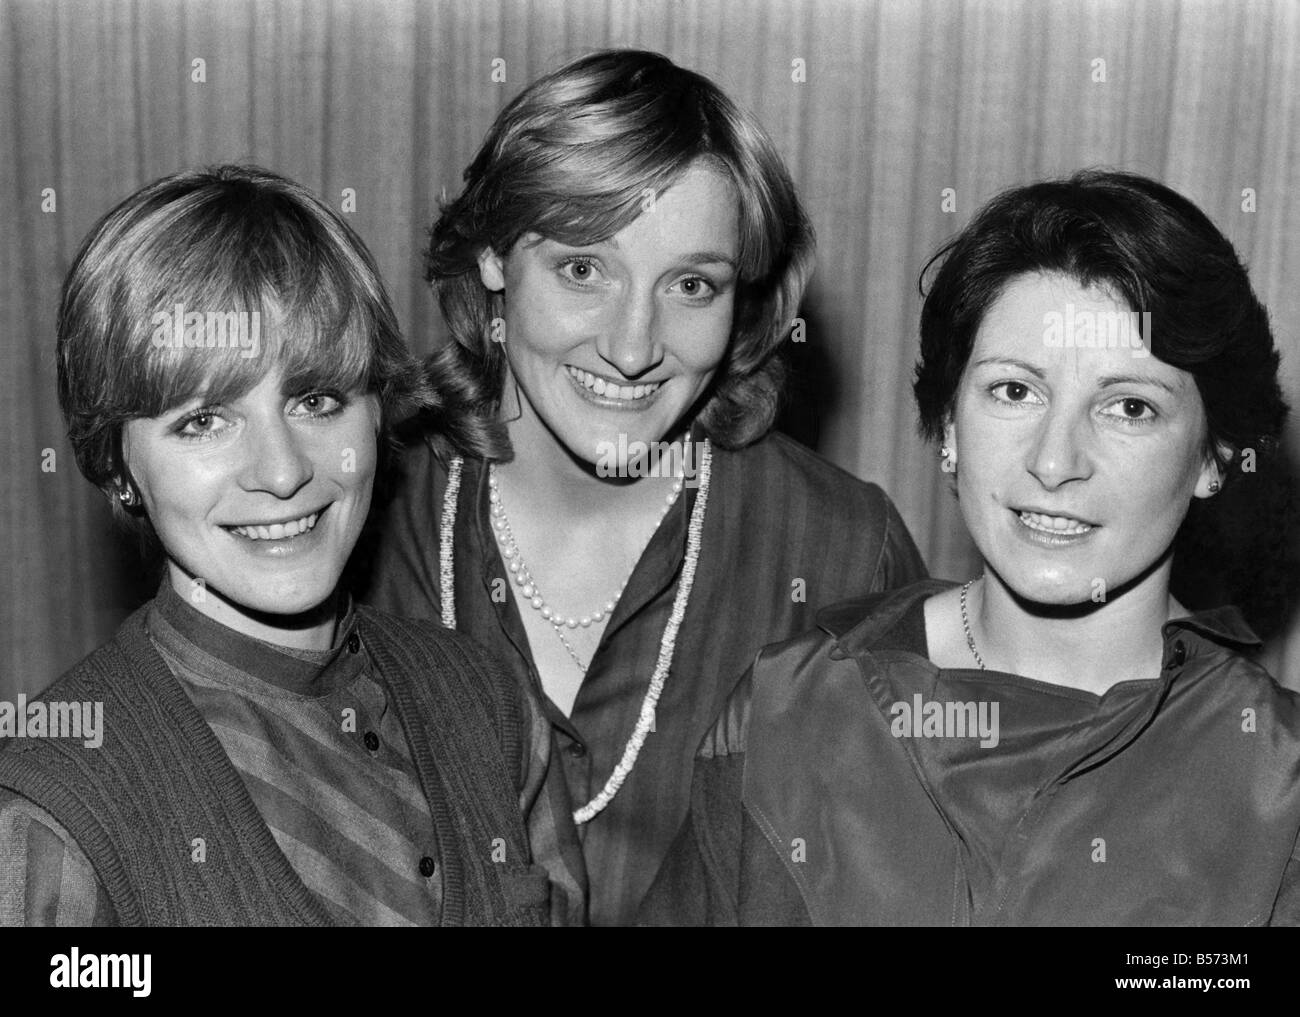 Rachel Bayliss, Lucinda green, and Virginia Holgate. British Eventing team riders. December 1982 P003703 Stock Photo